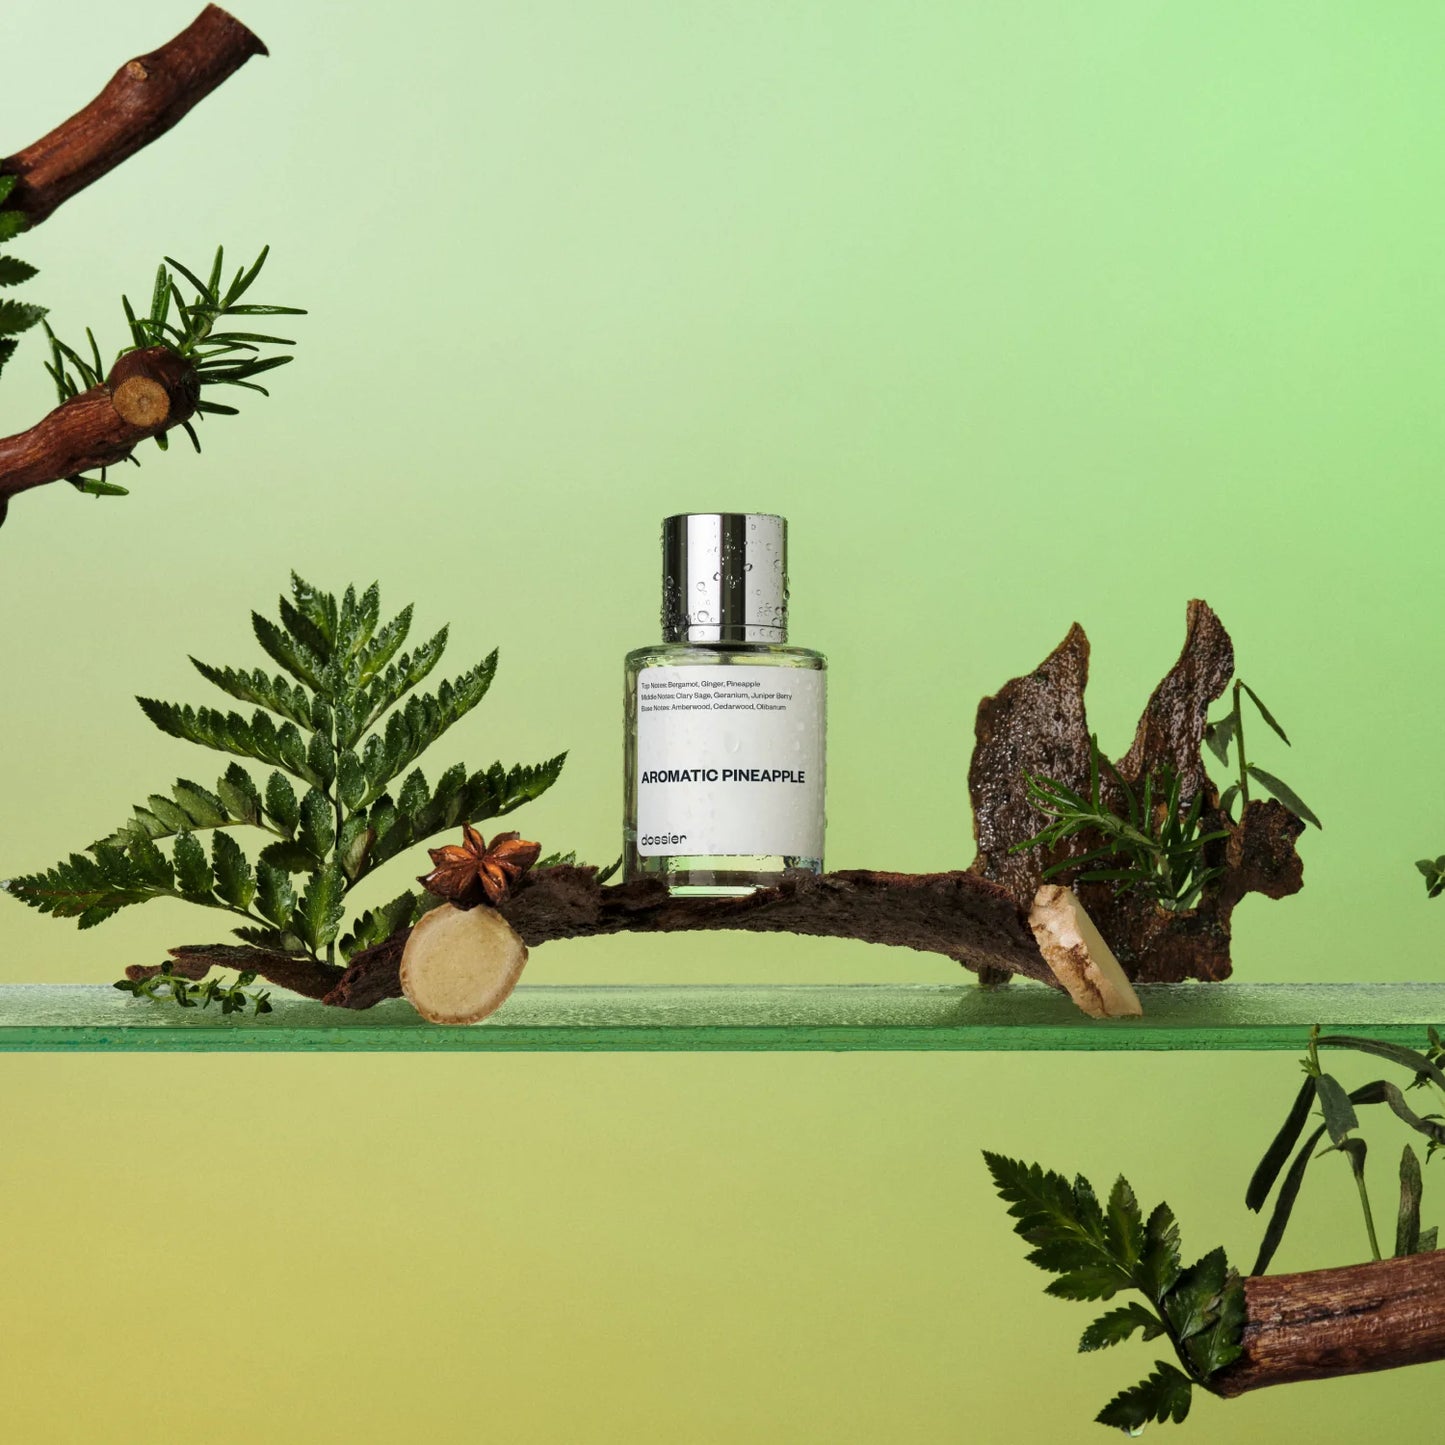 Dossier Aromatic Pineapple Eau de Parfum Inspired by YSL's Y 50 ml